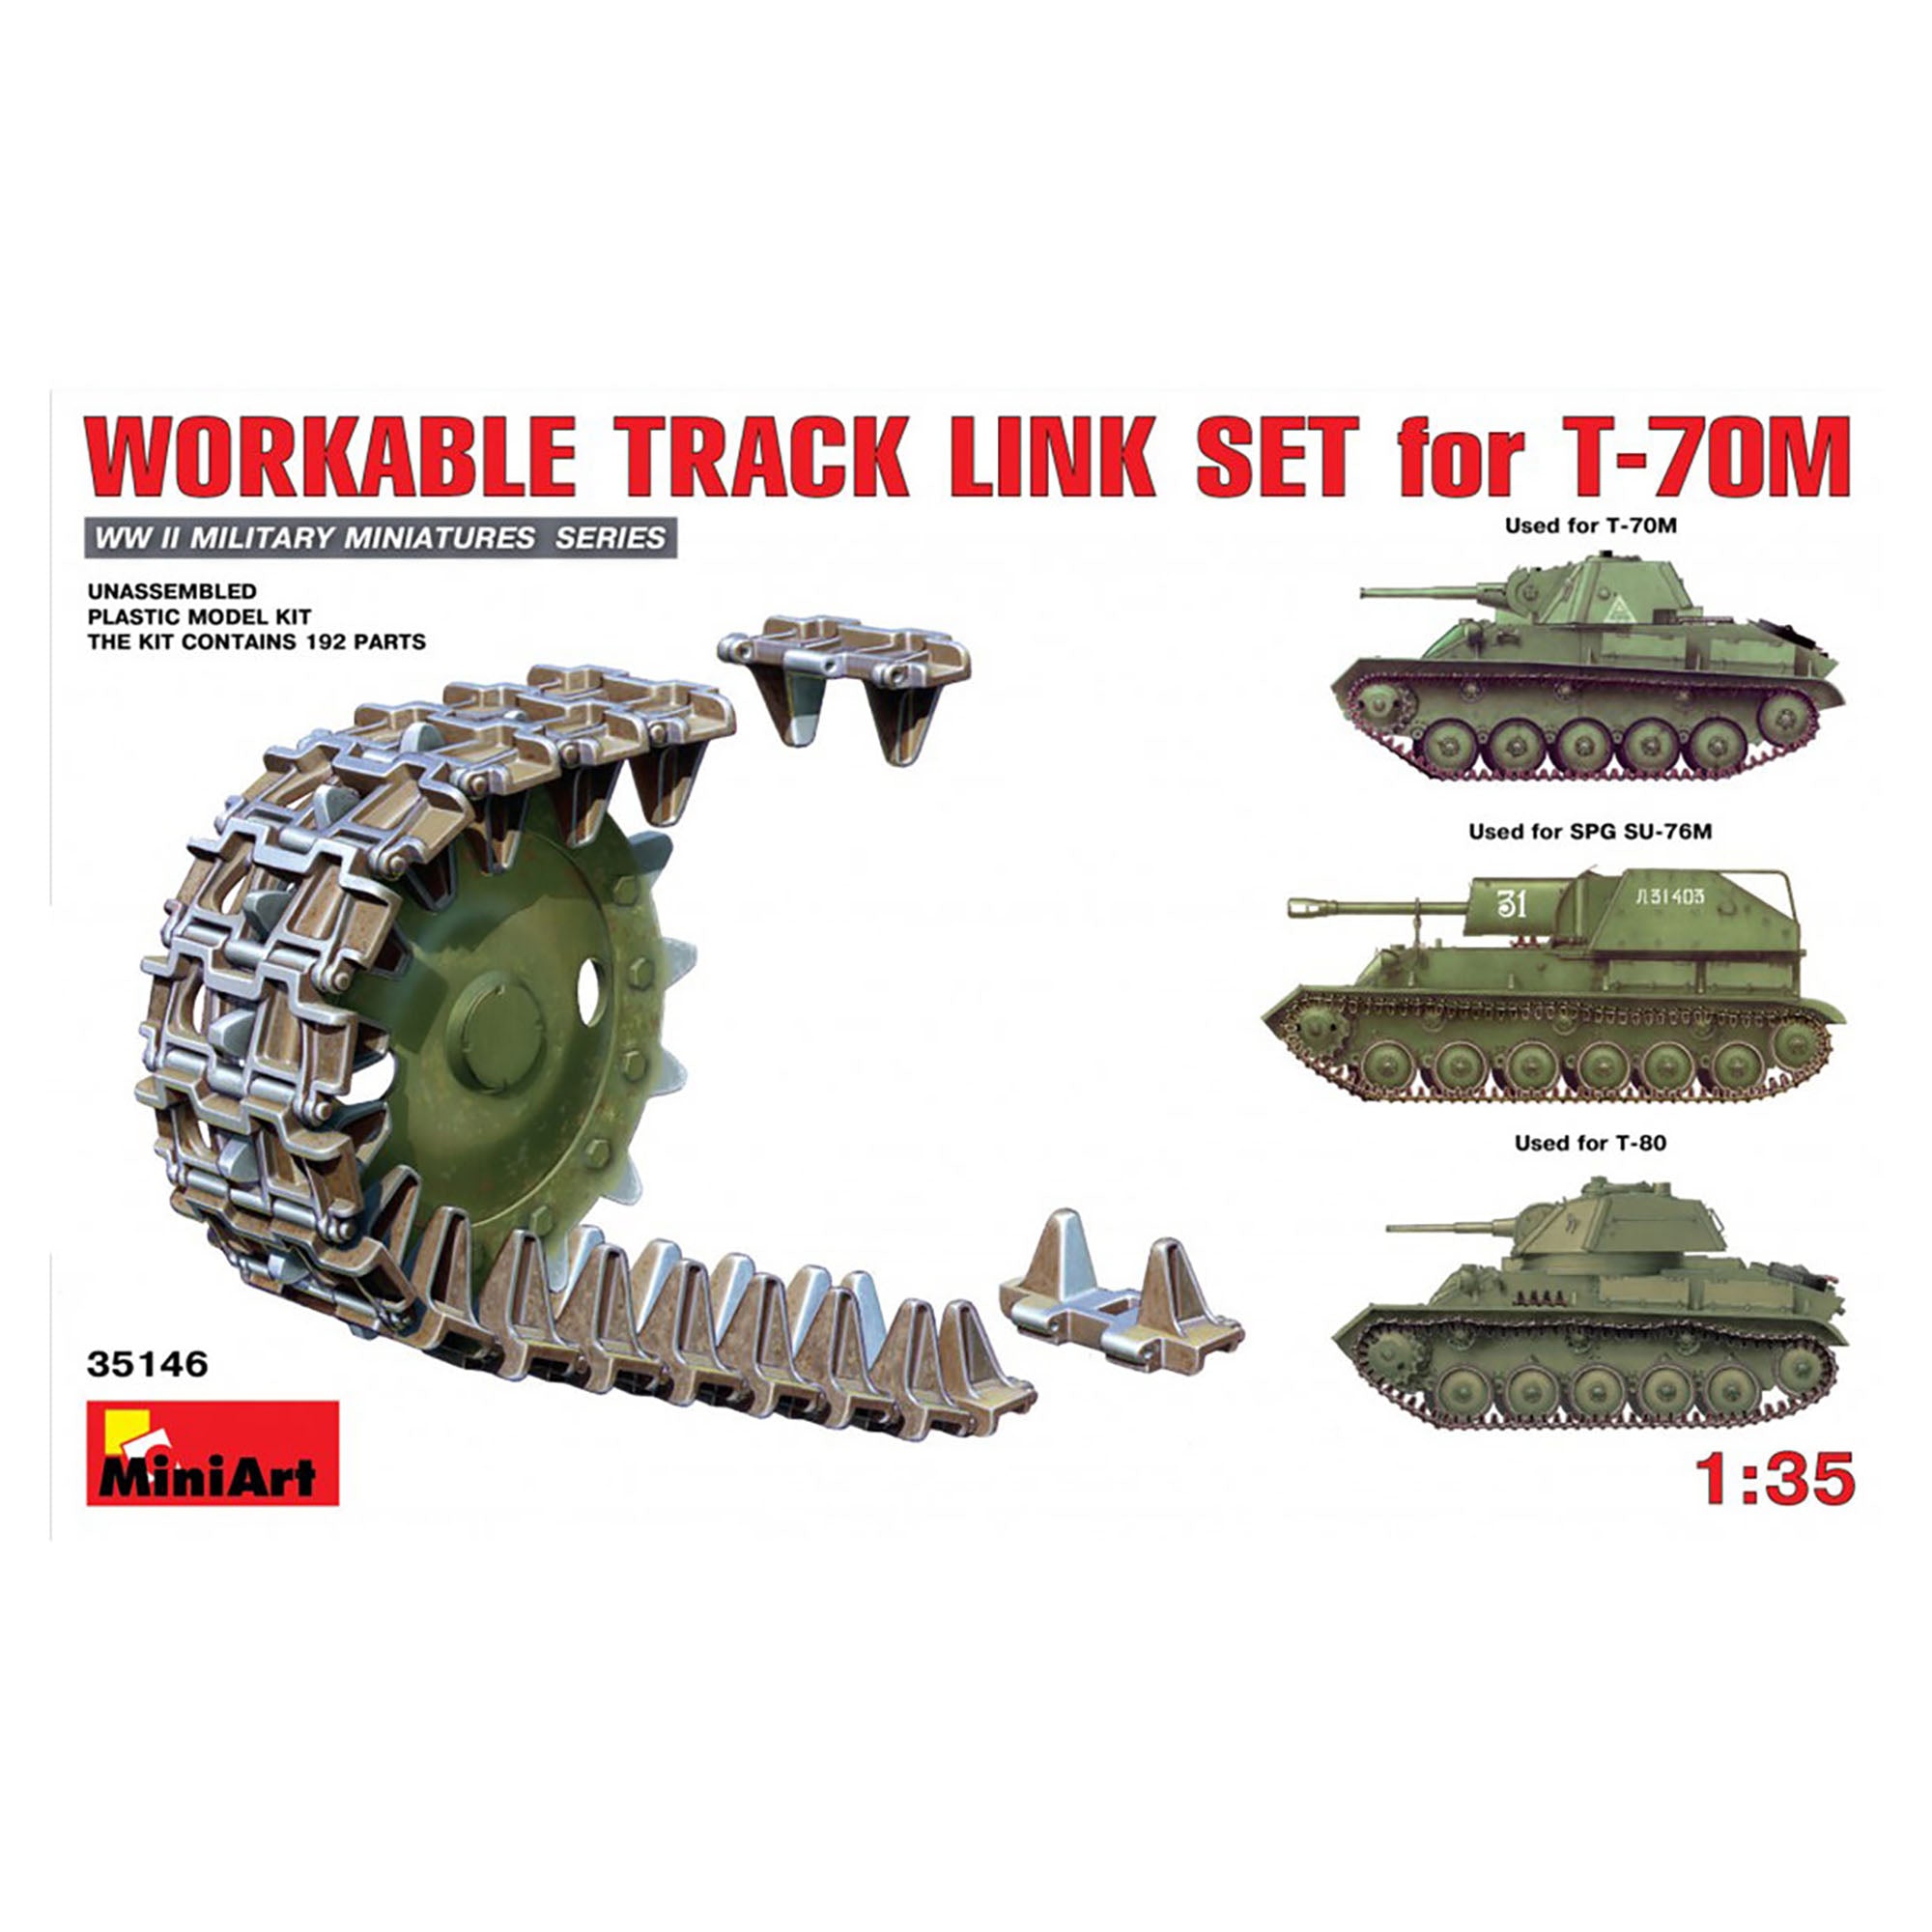 MiniArt 35146 1/35 Workable Track Link Set For T-70M Model Kit